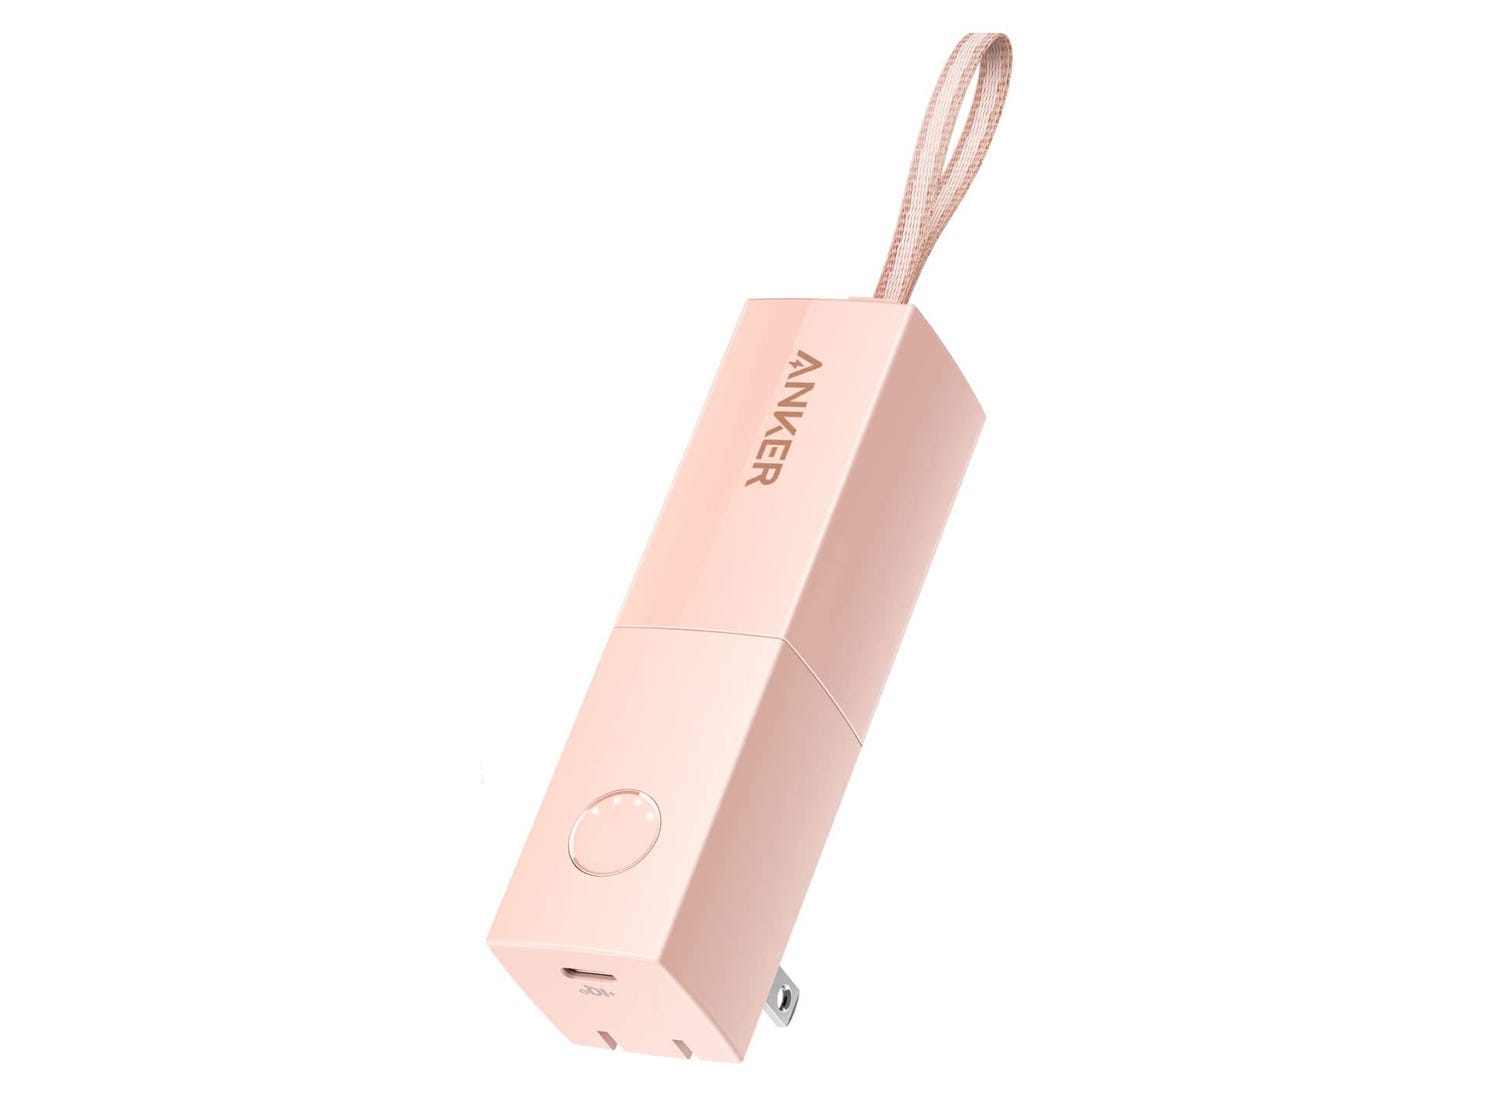 Anker、USB急速充電器＋モバイルバッテリーの新色ピンク発売